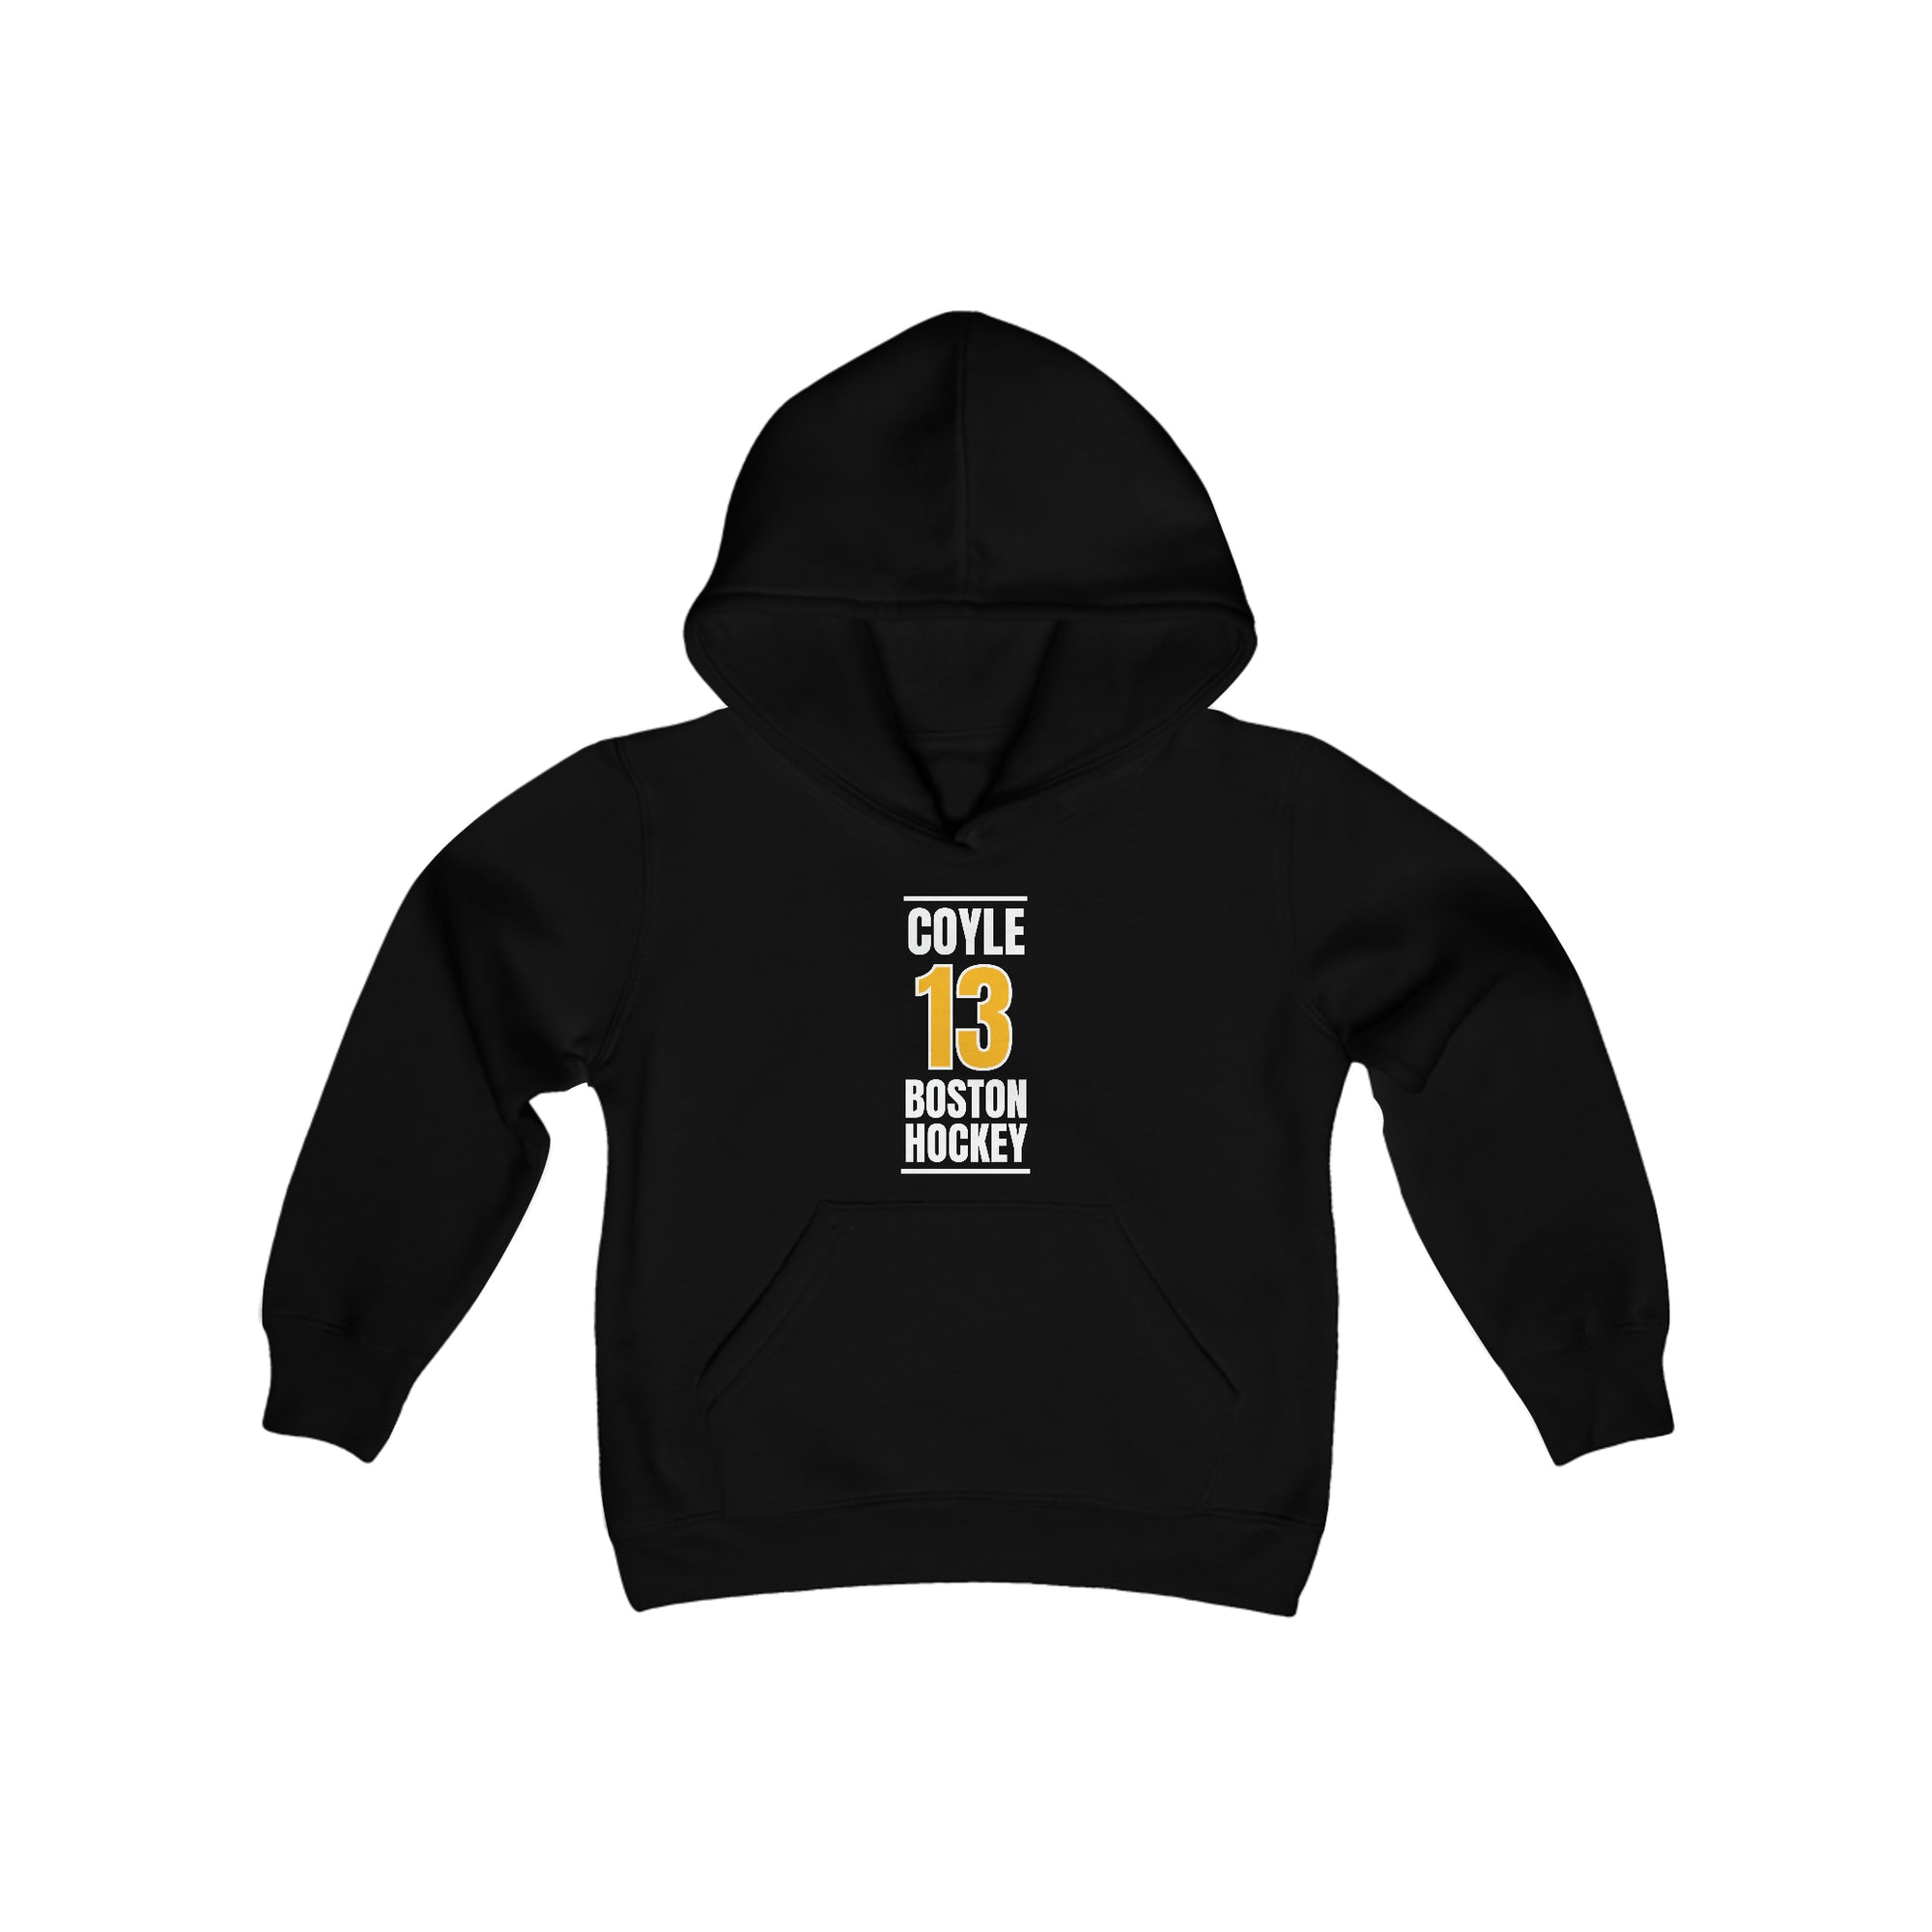 Coyle 13 Boston Hockey Gold Vertical Design Youth Hooded Sweatshirt